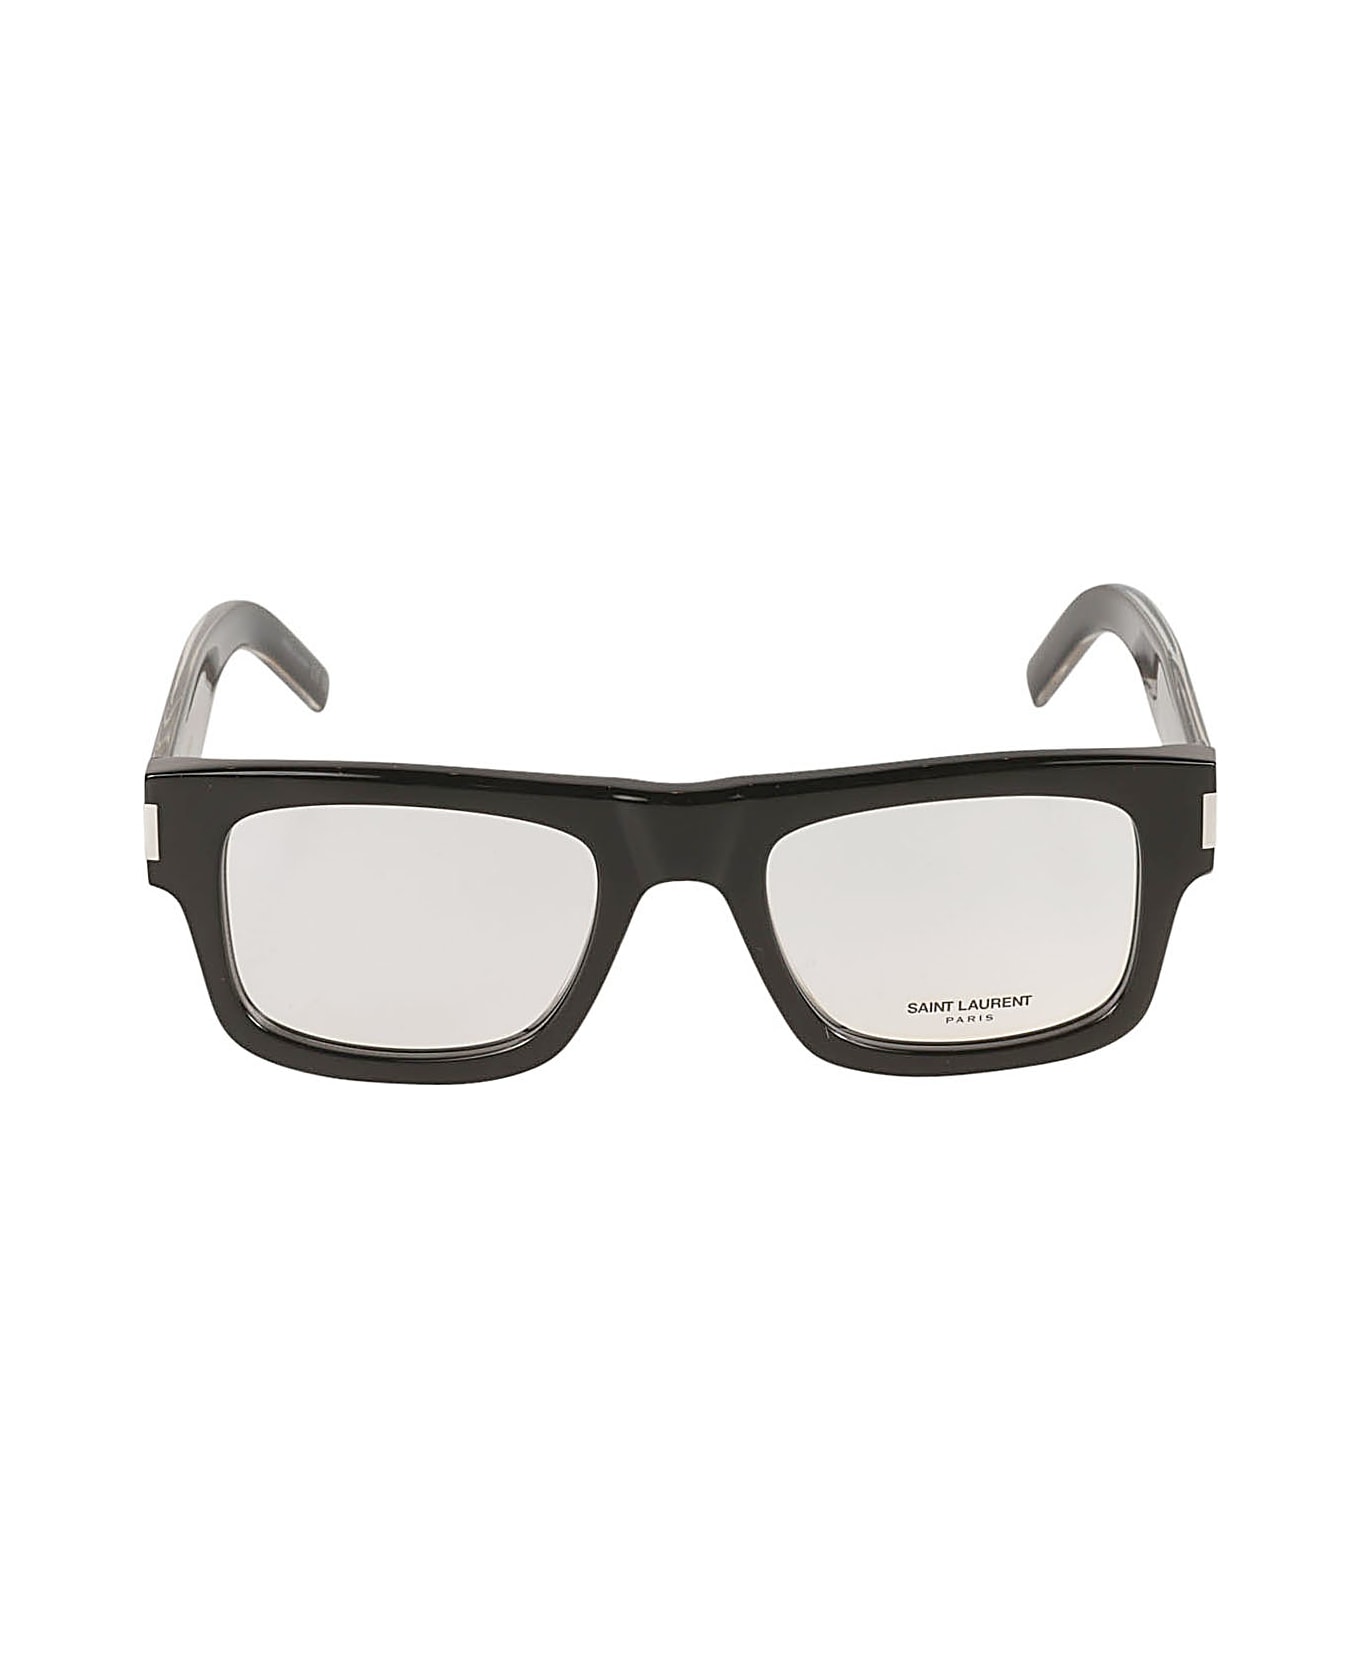 Saint Laurent Eyewear Square Frame Classic Glasses - Black/Crystal/Transparent アイウェア